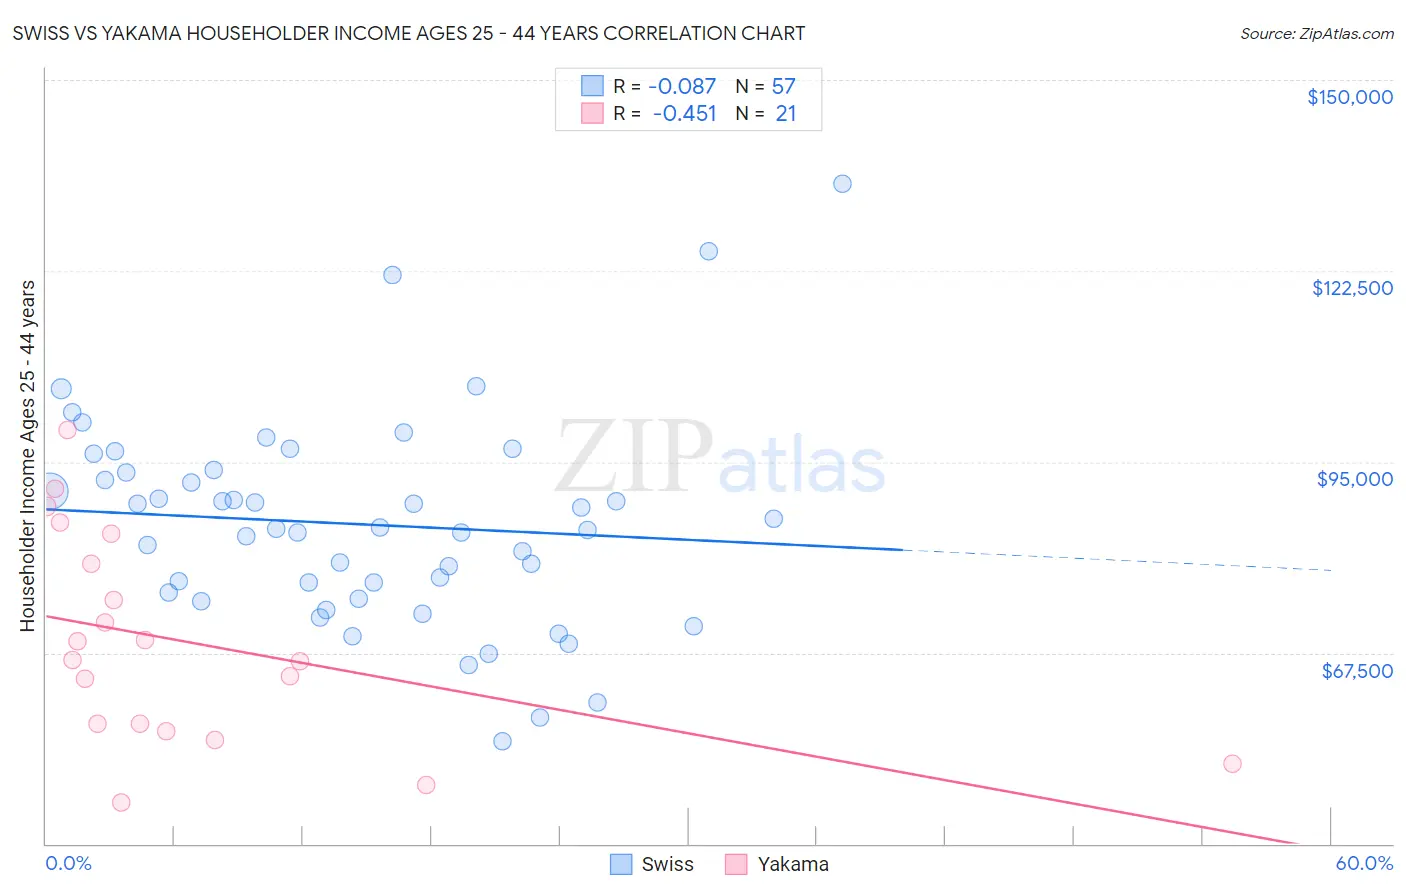 Swiss vs Yakama Householder Income Ages 25 - 44 years